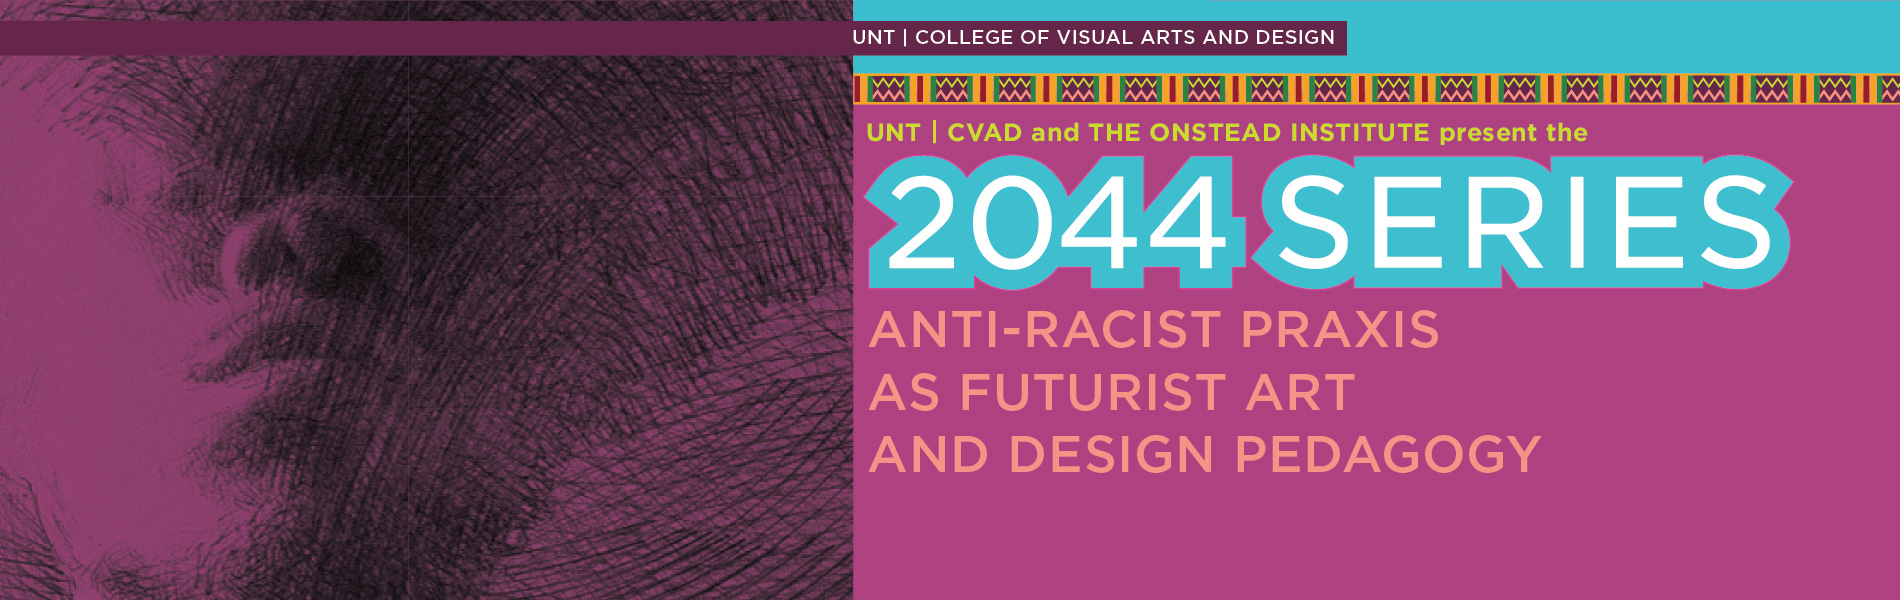 2044 Series Anti-Racist Praxis as Futurist Art and Design Pedagogy